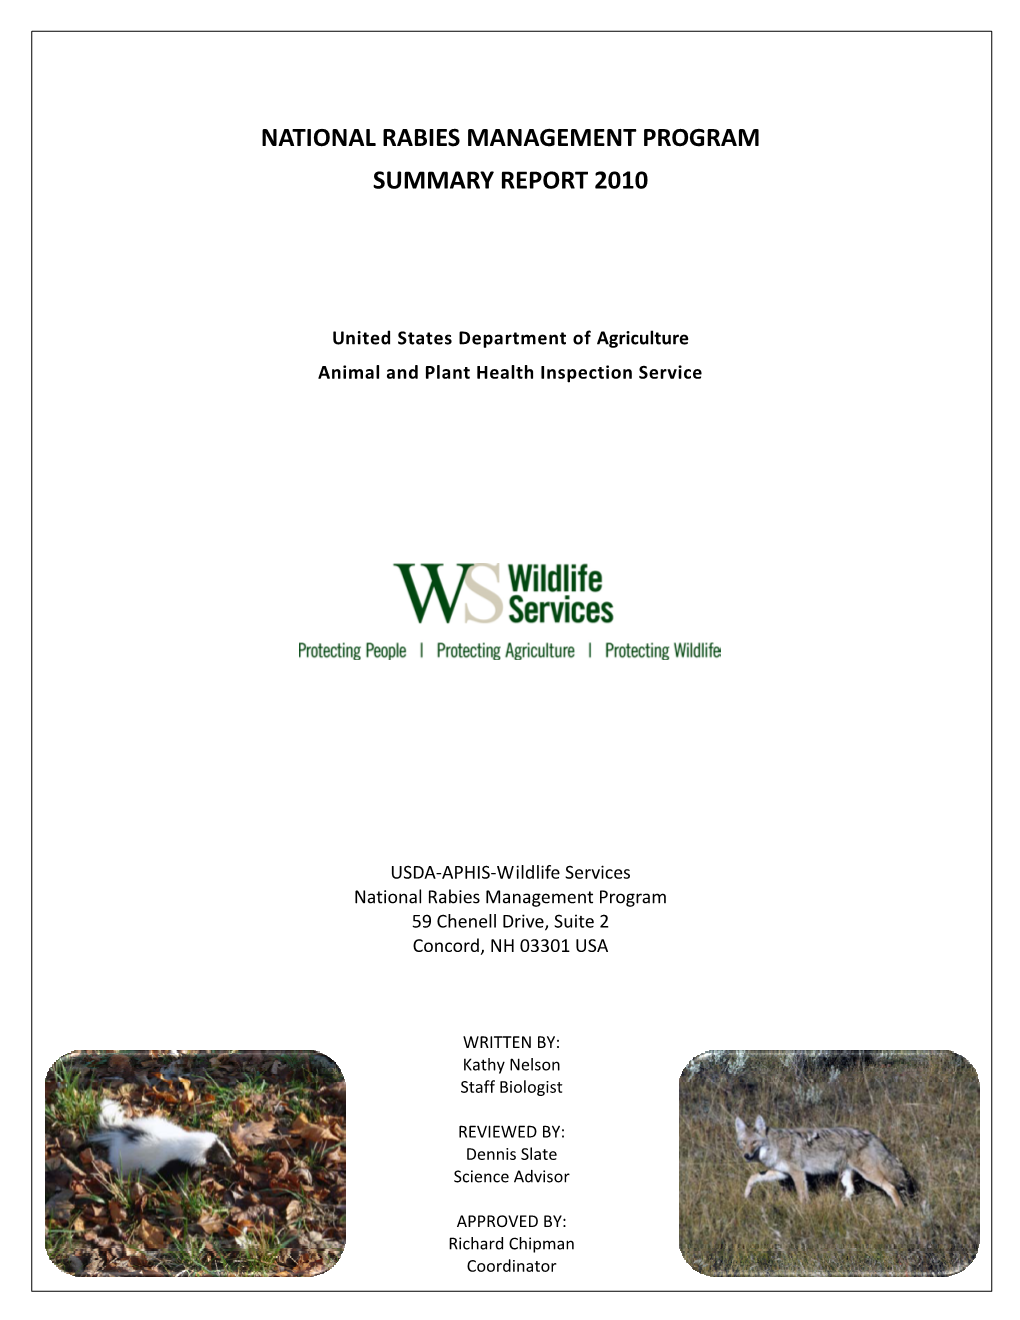 National Rabies Management Program Report 2010